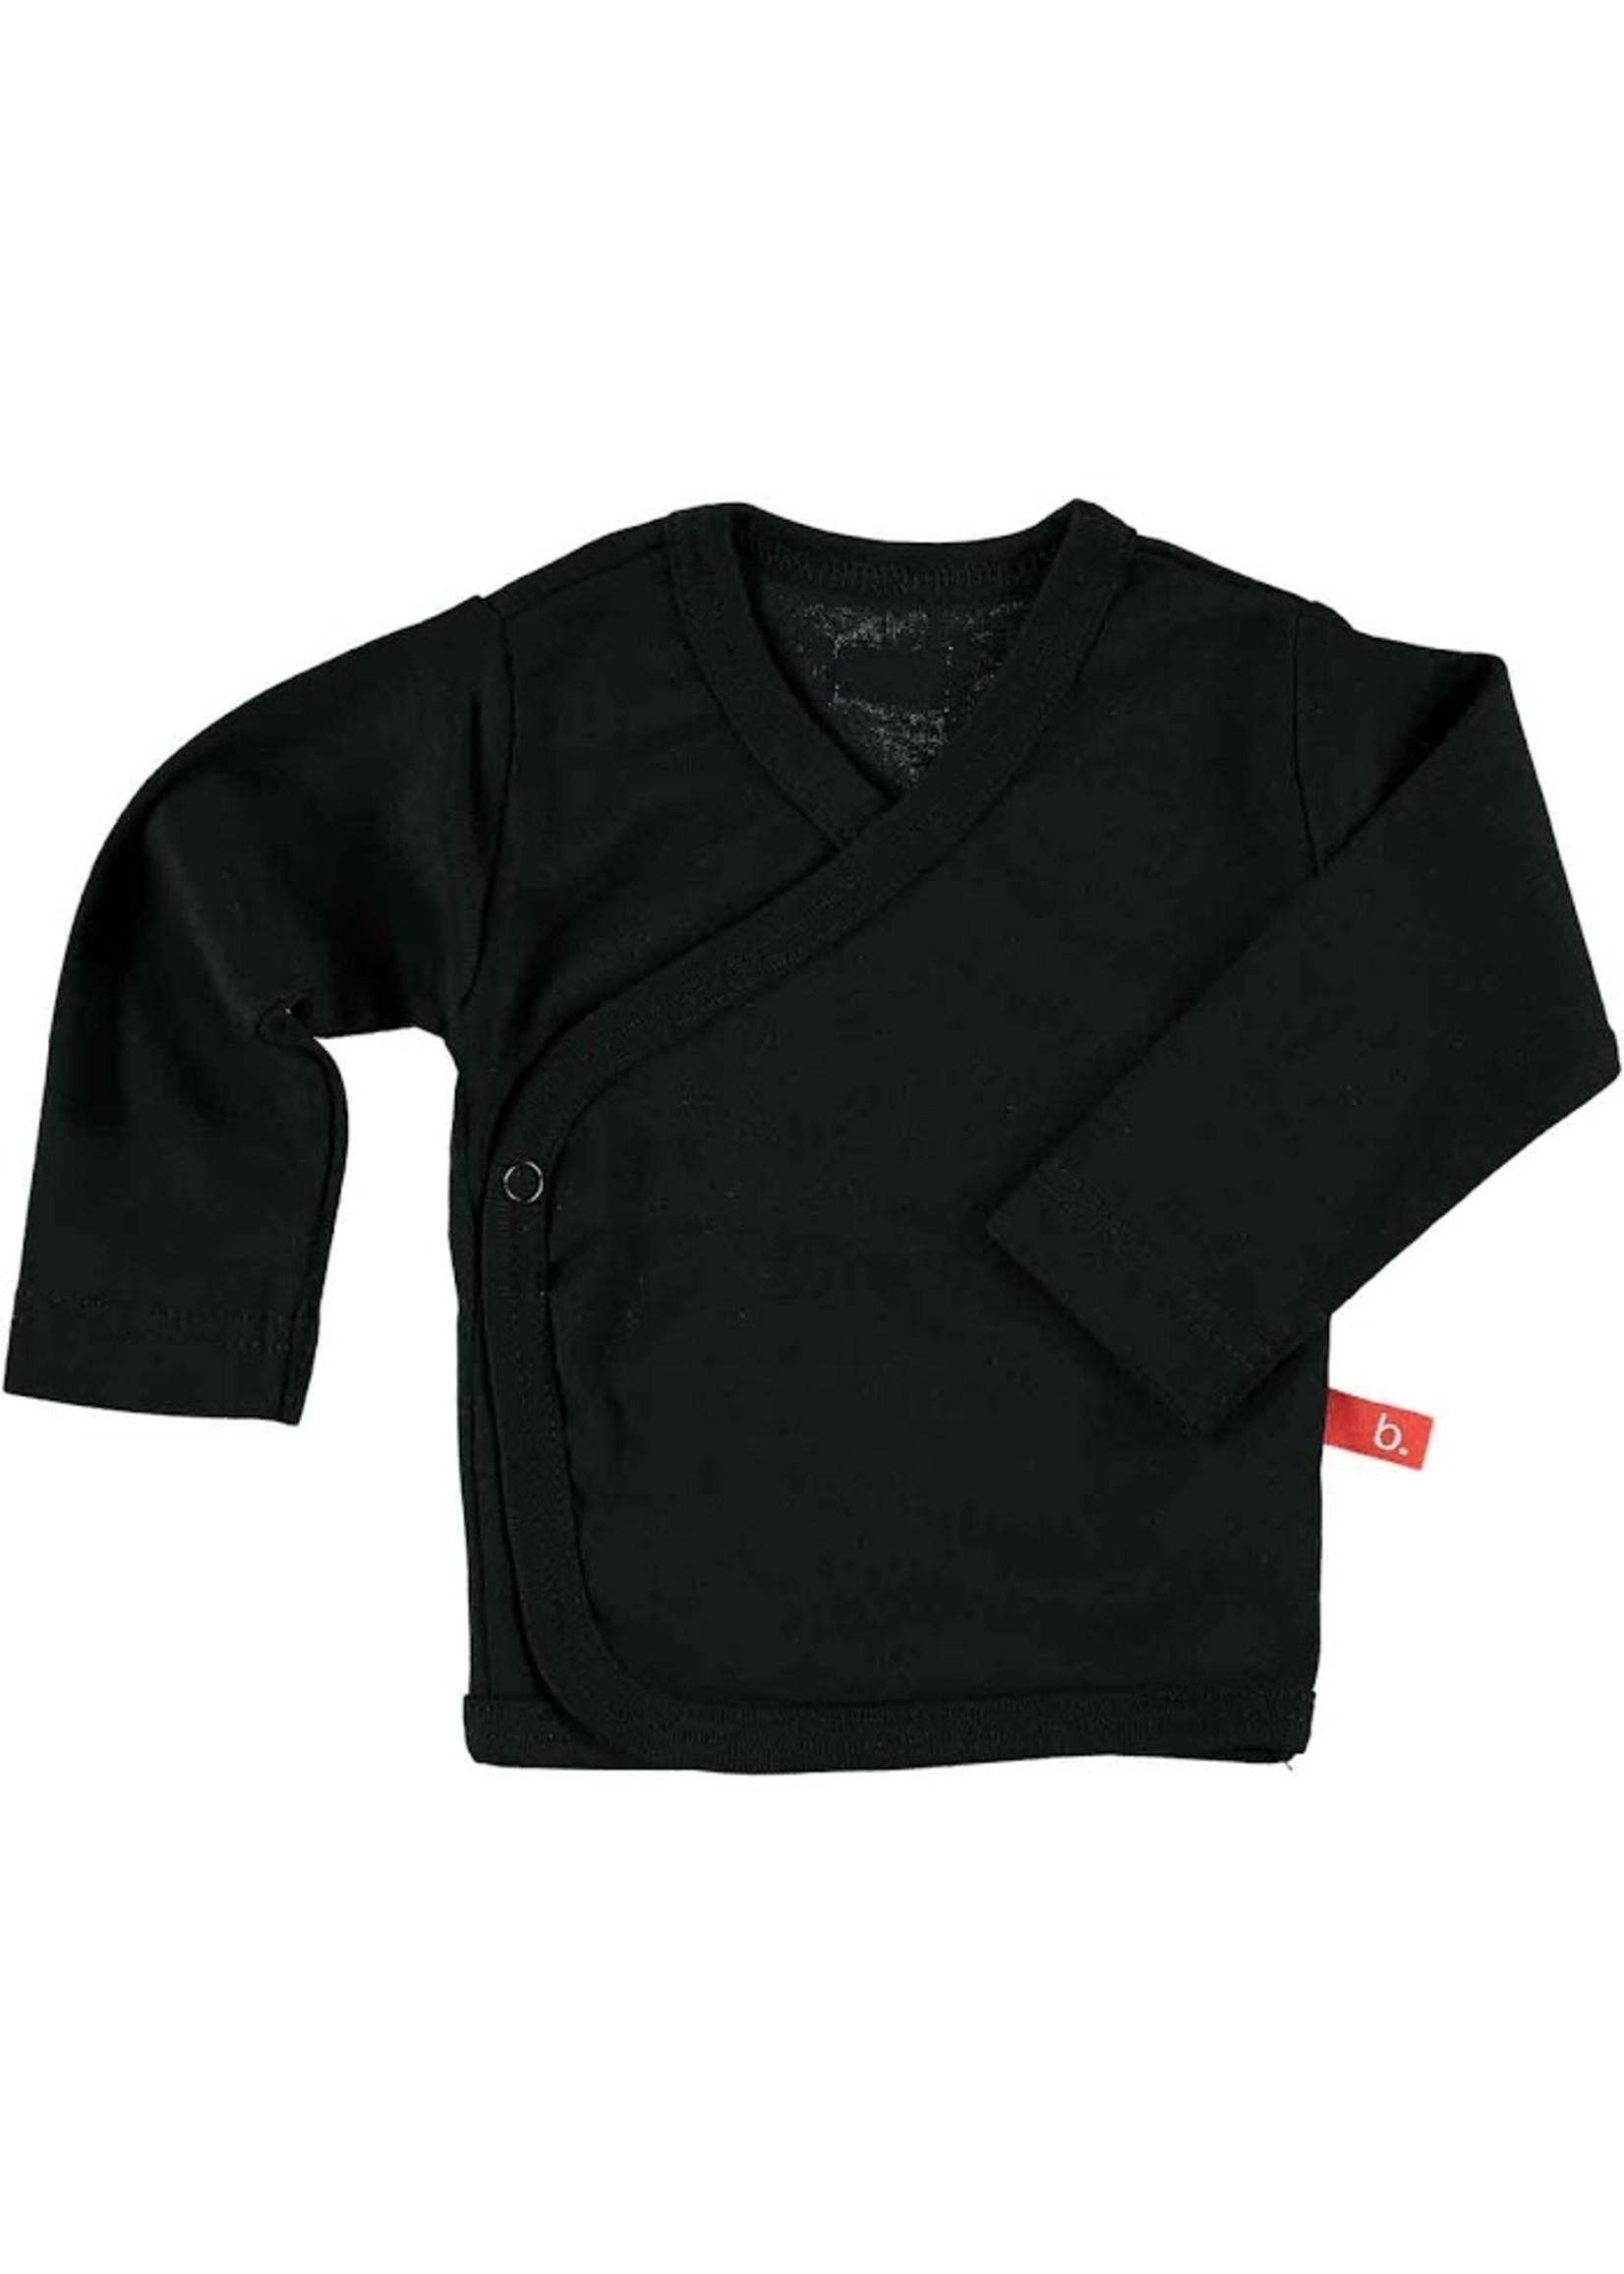 Limo basics Limobasics pack (set shirt, pants, bib and hat) black, size 50